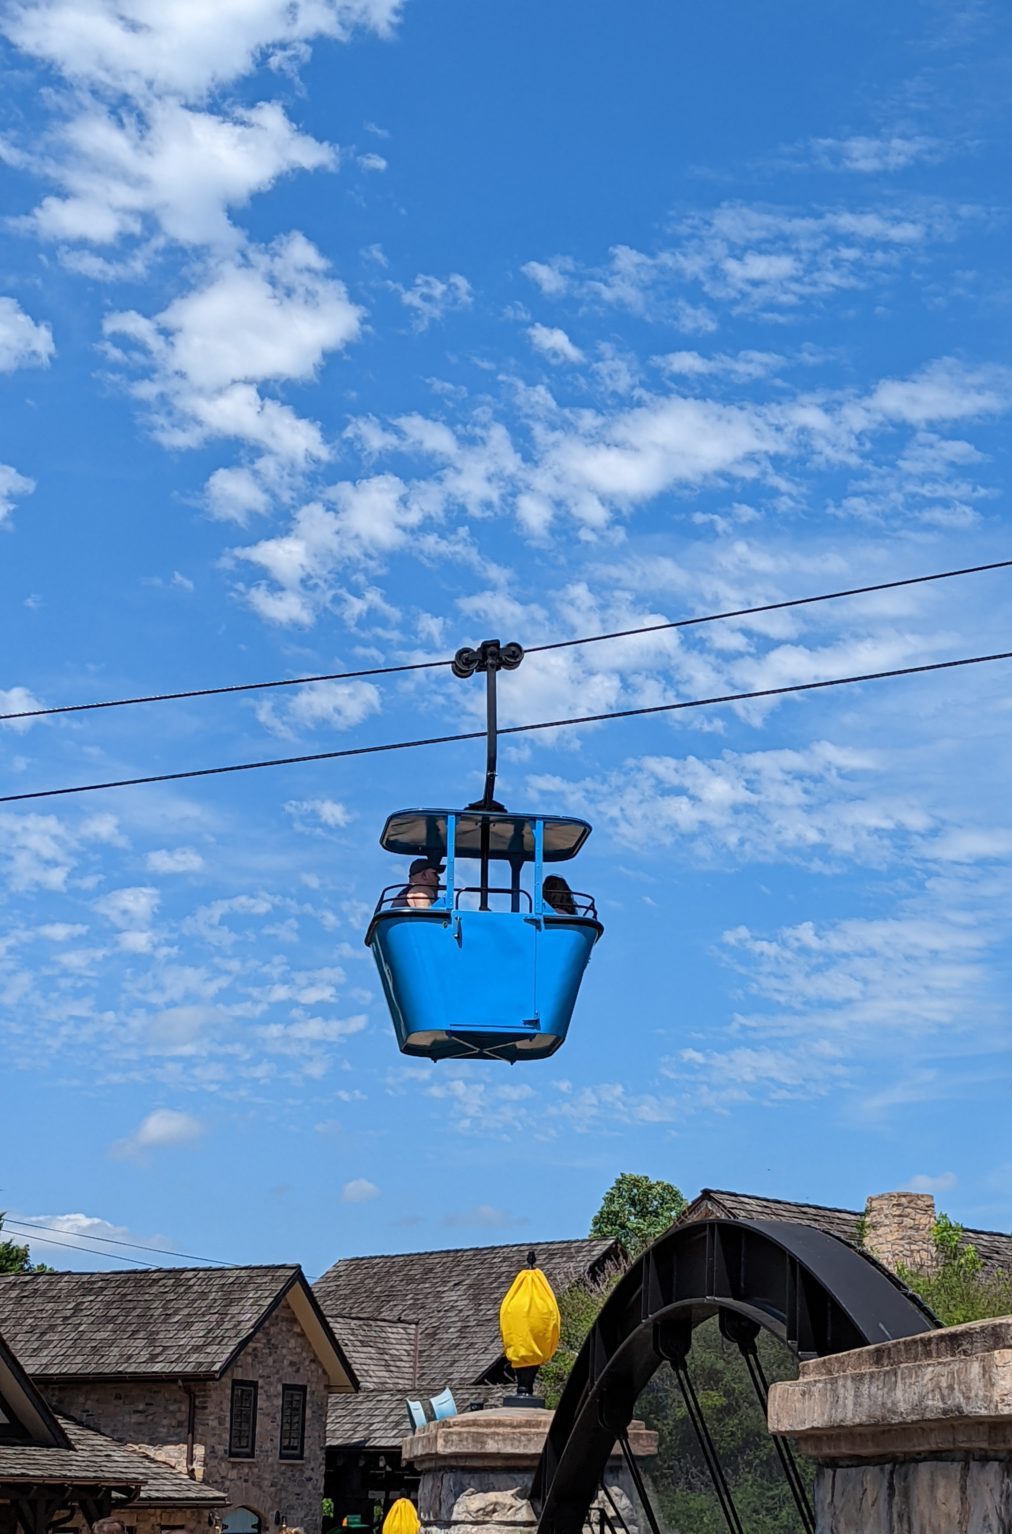  Sky ride at Busch Gardens